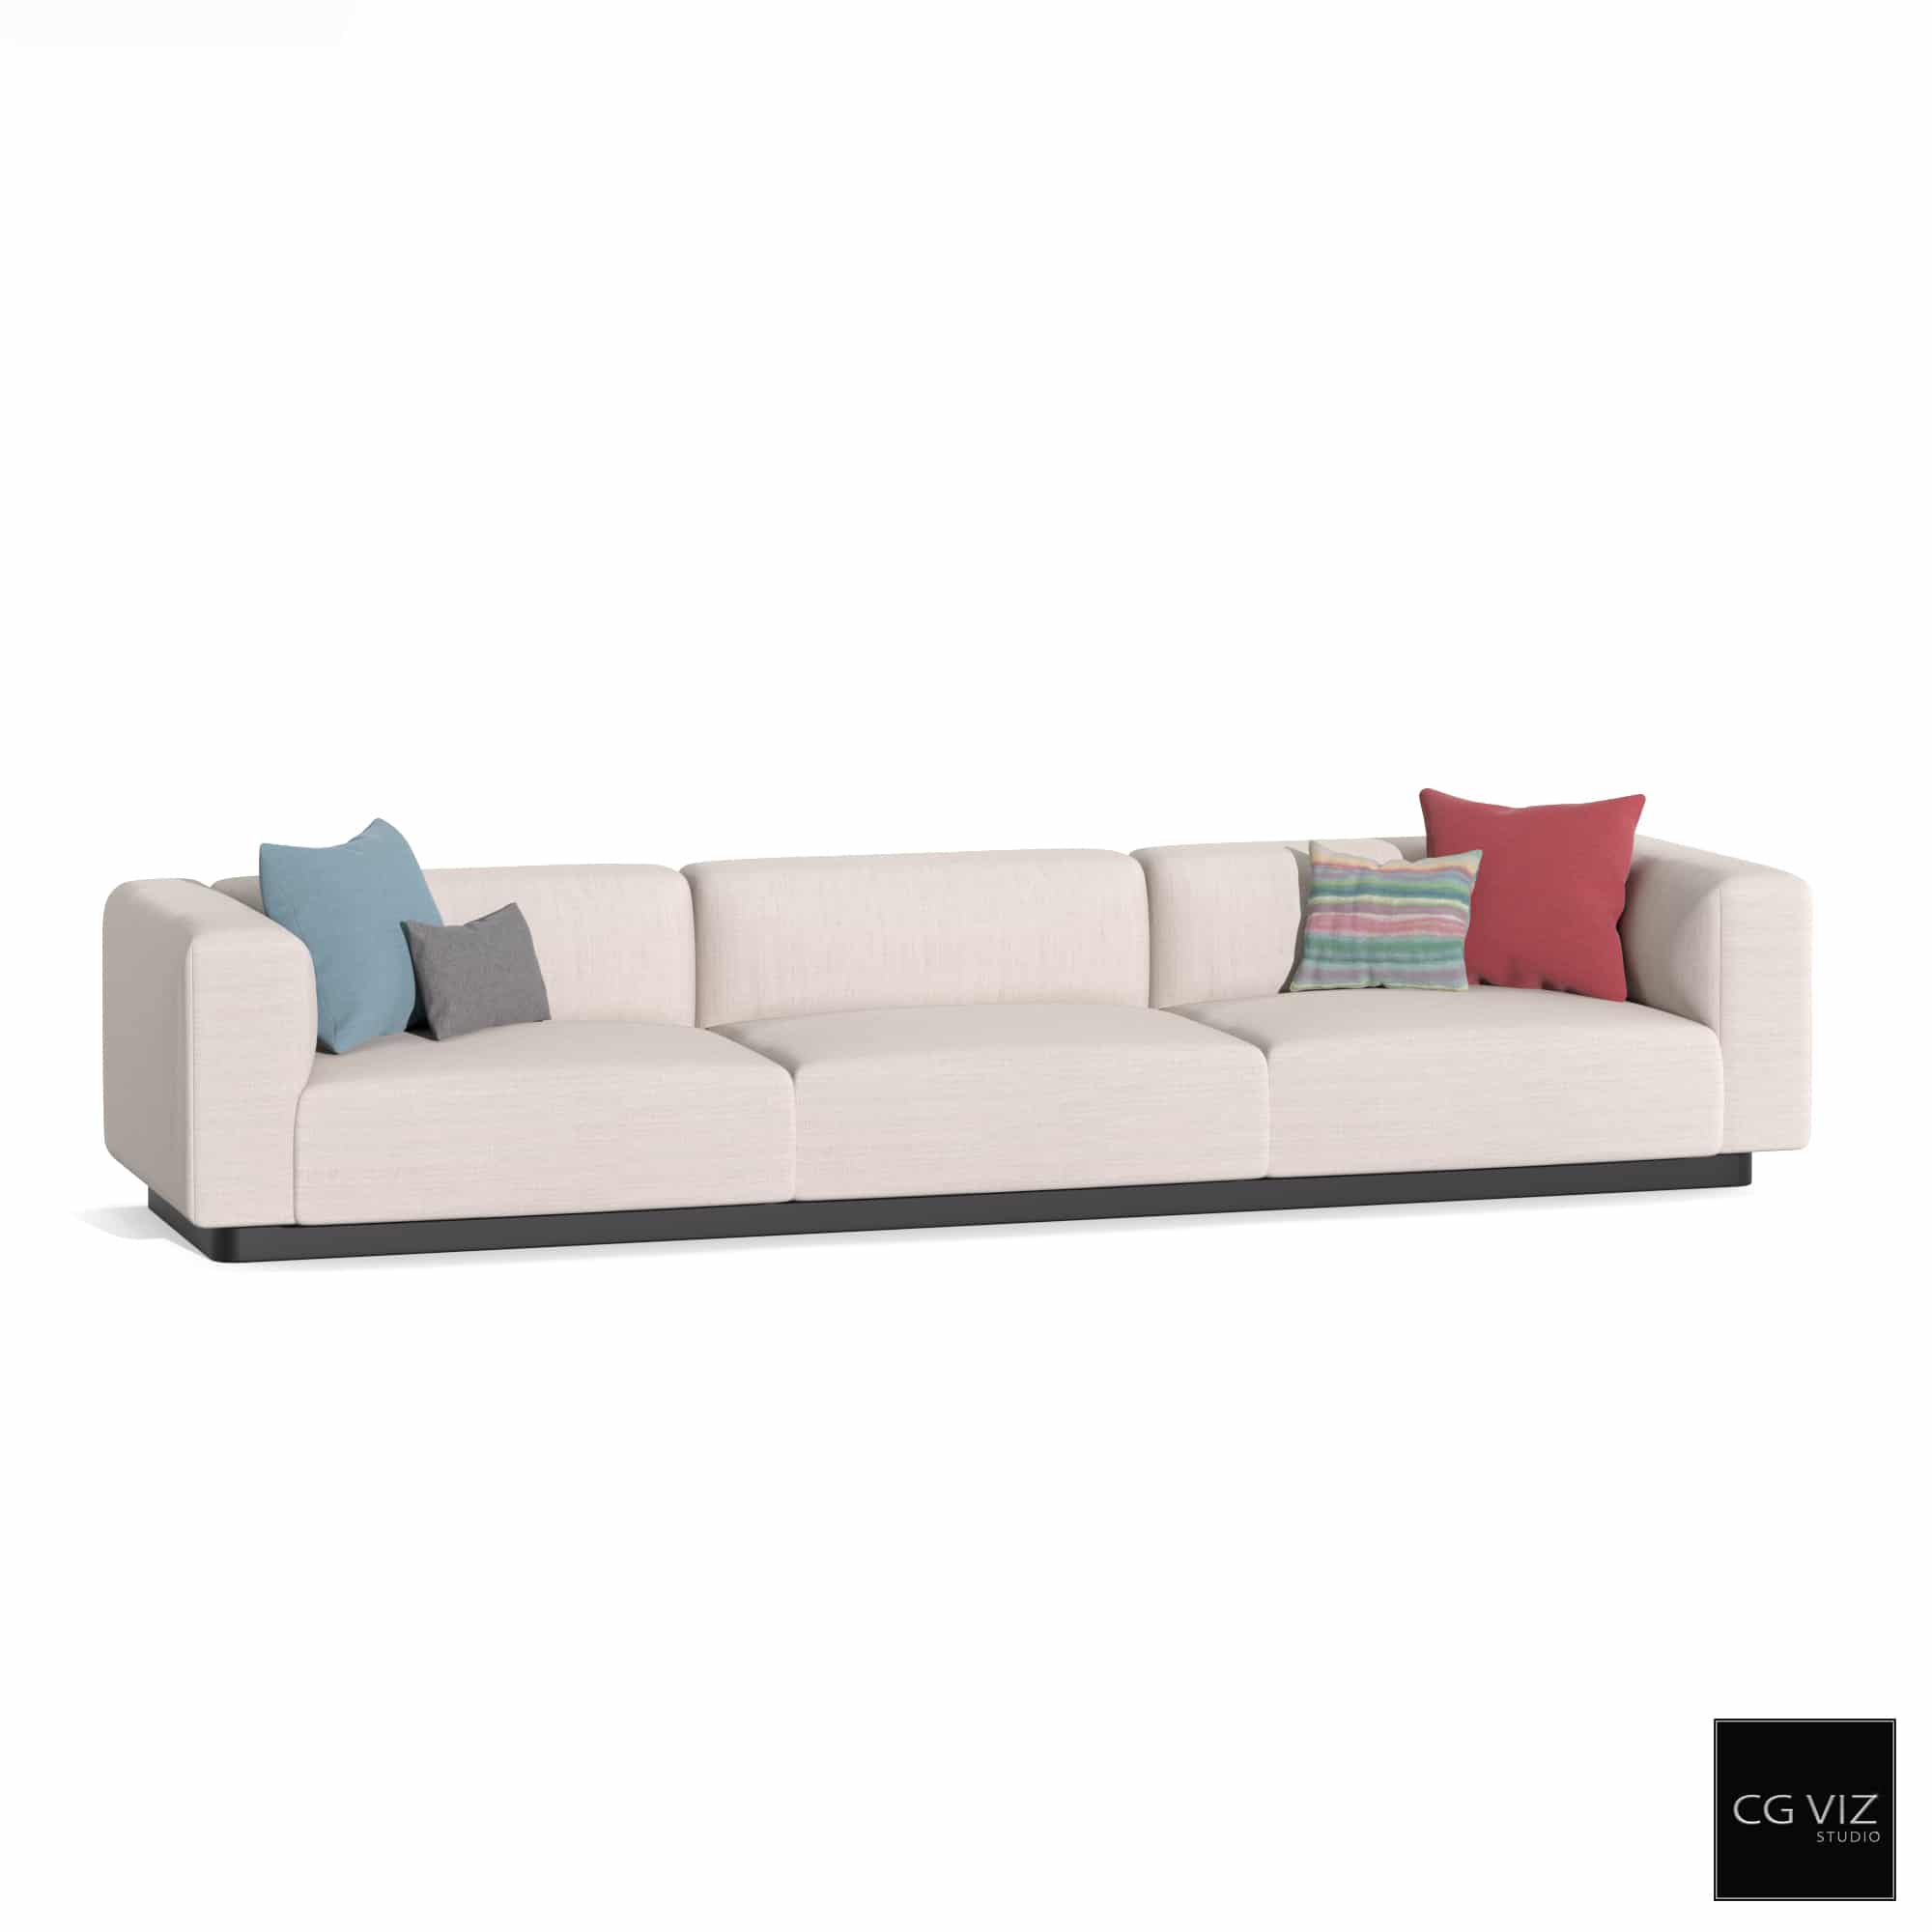 Rendered Preview of Vitra Soft Modular Sofa by CGVIZSTUDIO